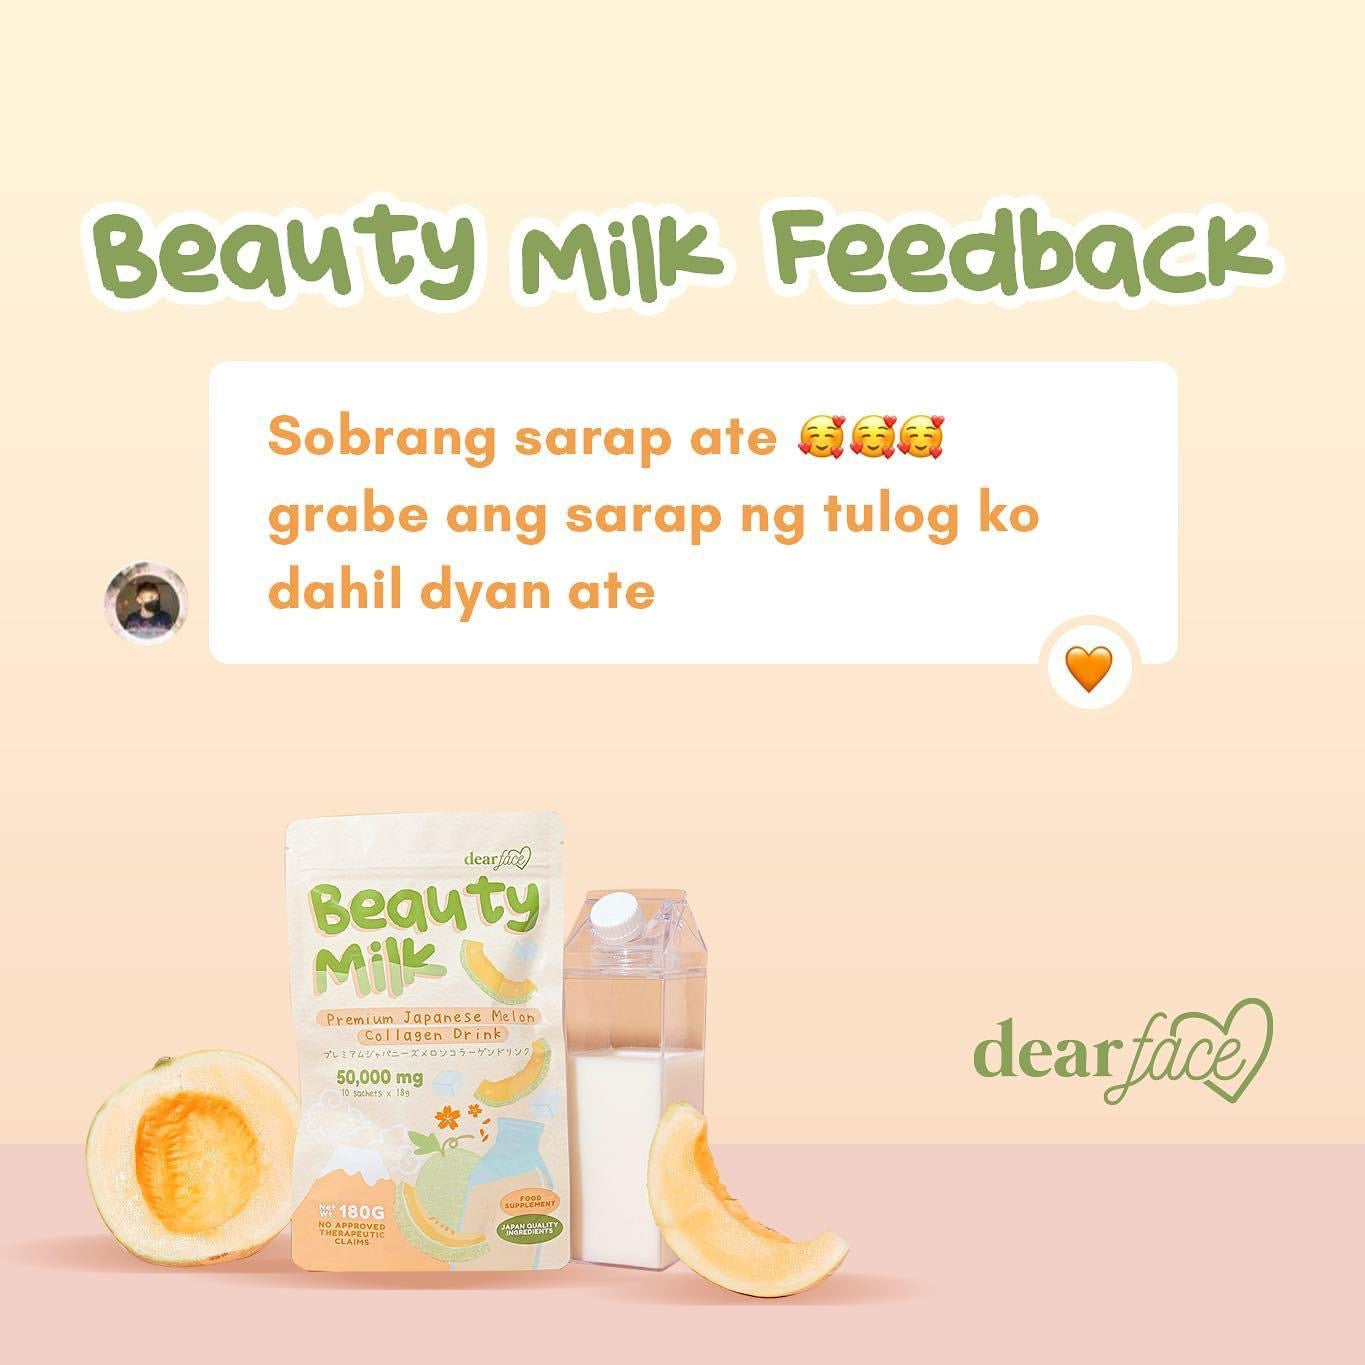 Dear face Beauty Milk